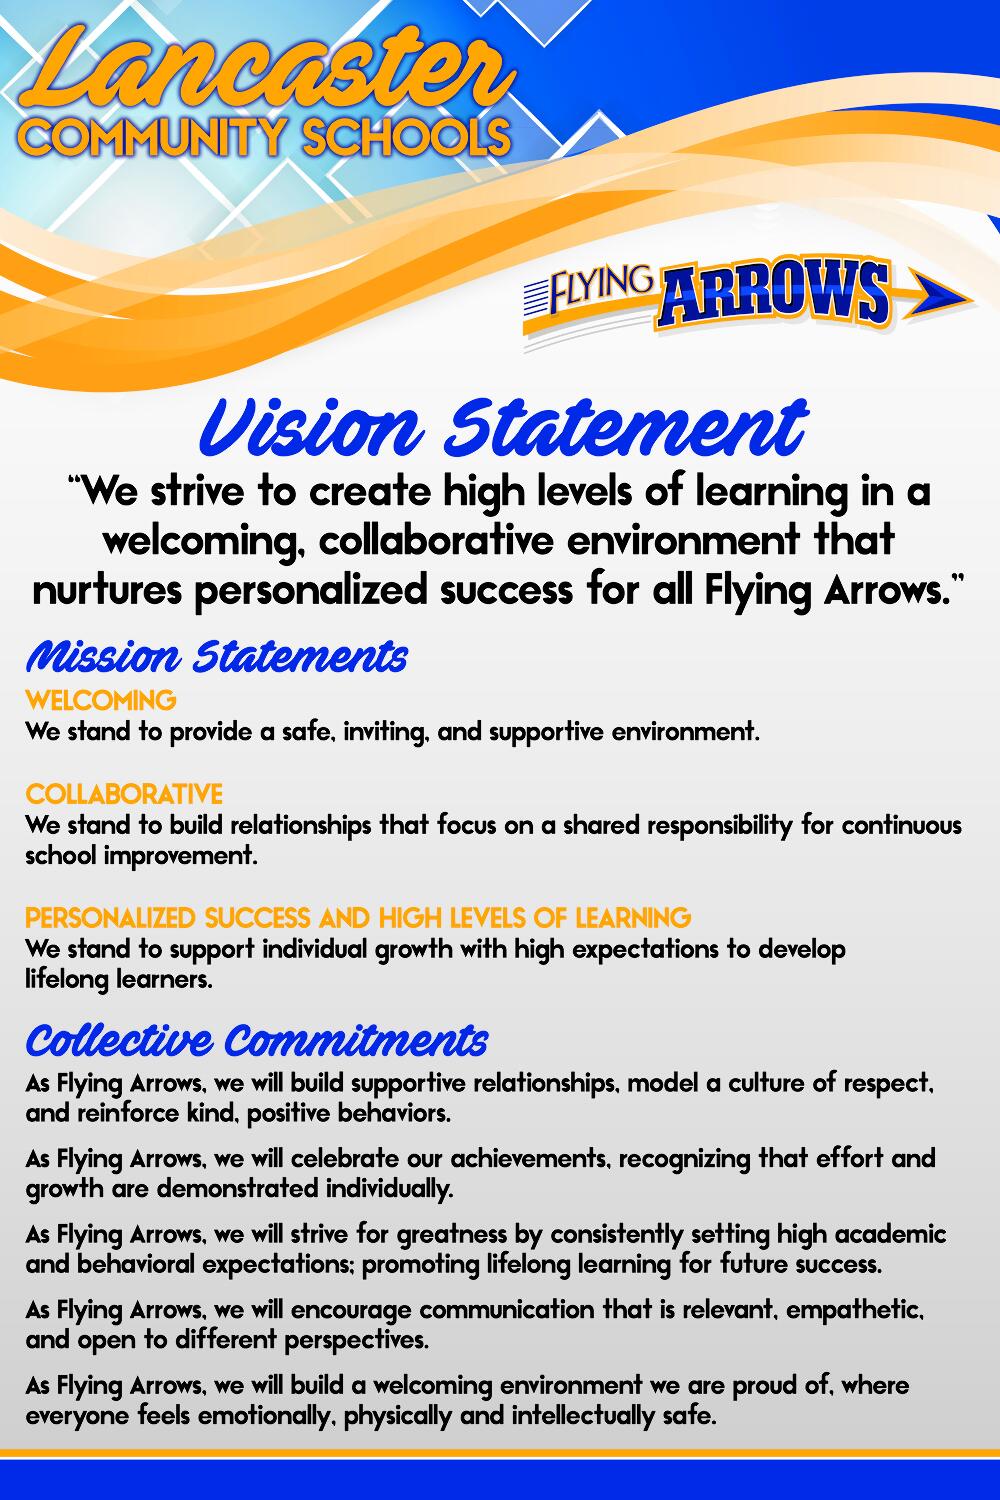 Winskill Elementary School Vision Statement